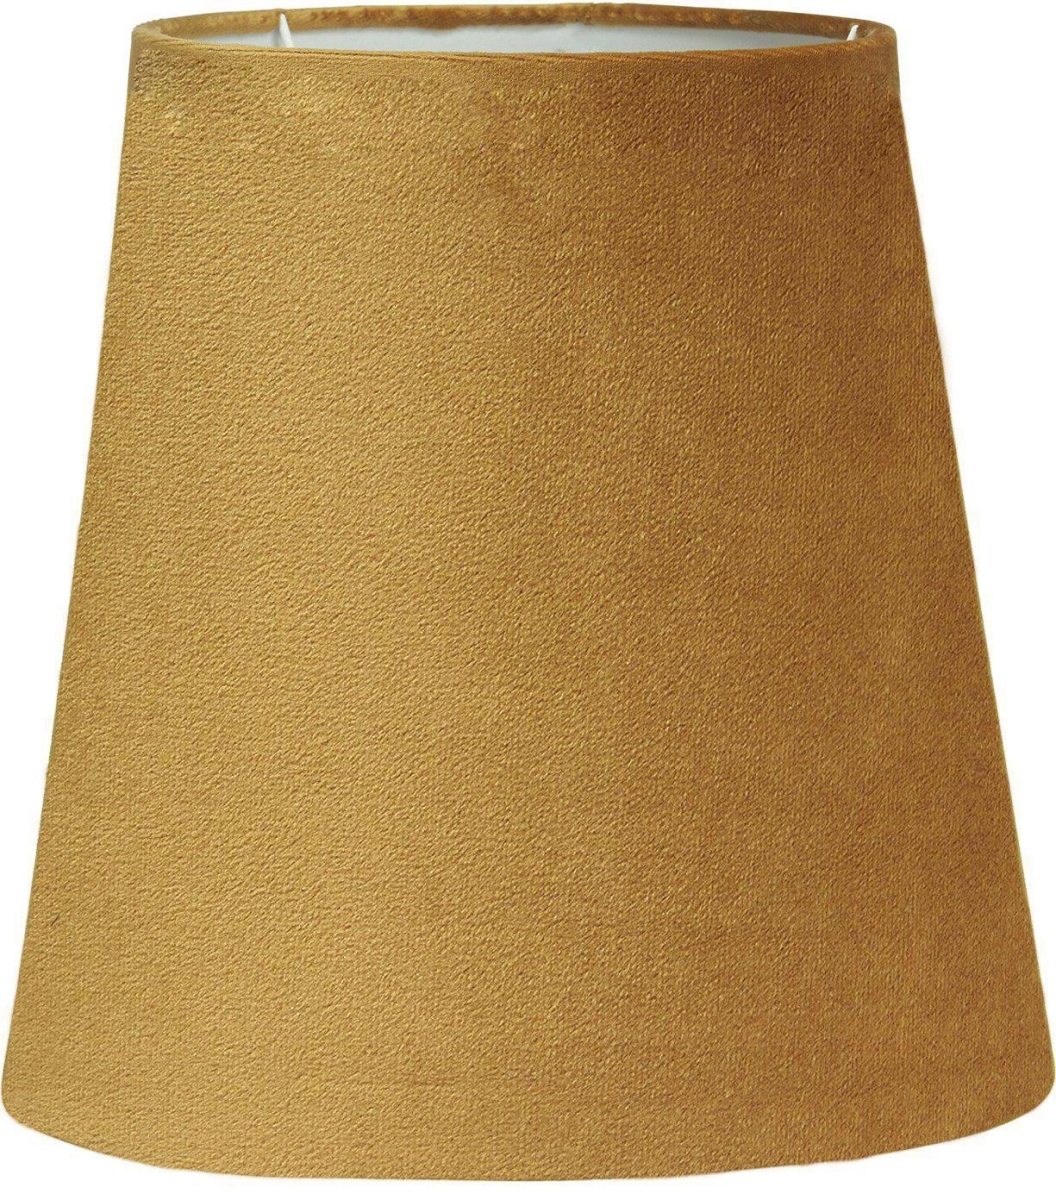 Lampenschirm Textil Samt gelb PR Home Queen 12x12cm Befestigungsklipp fr Kerzen Leuchtmittel